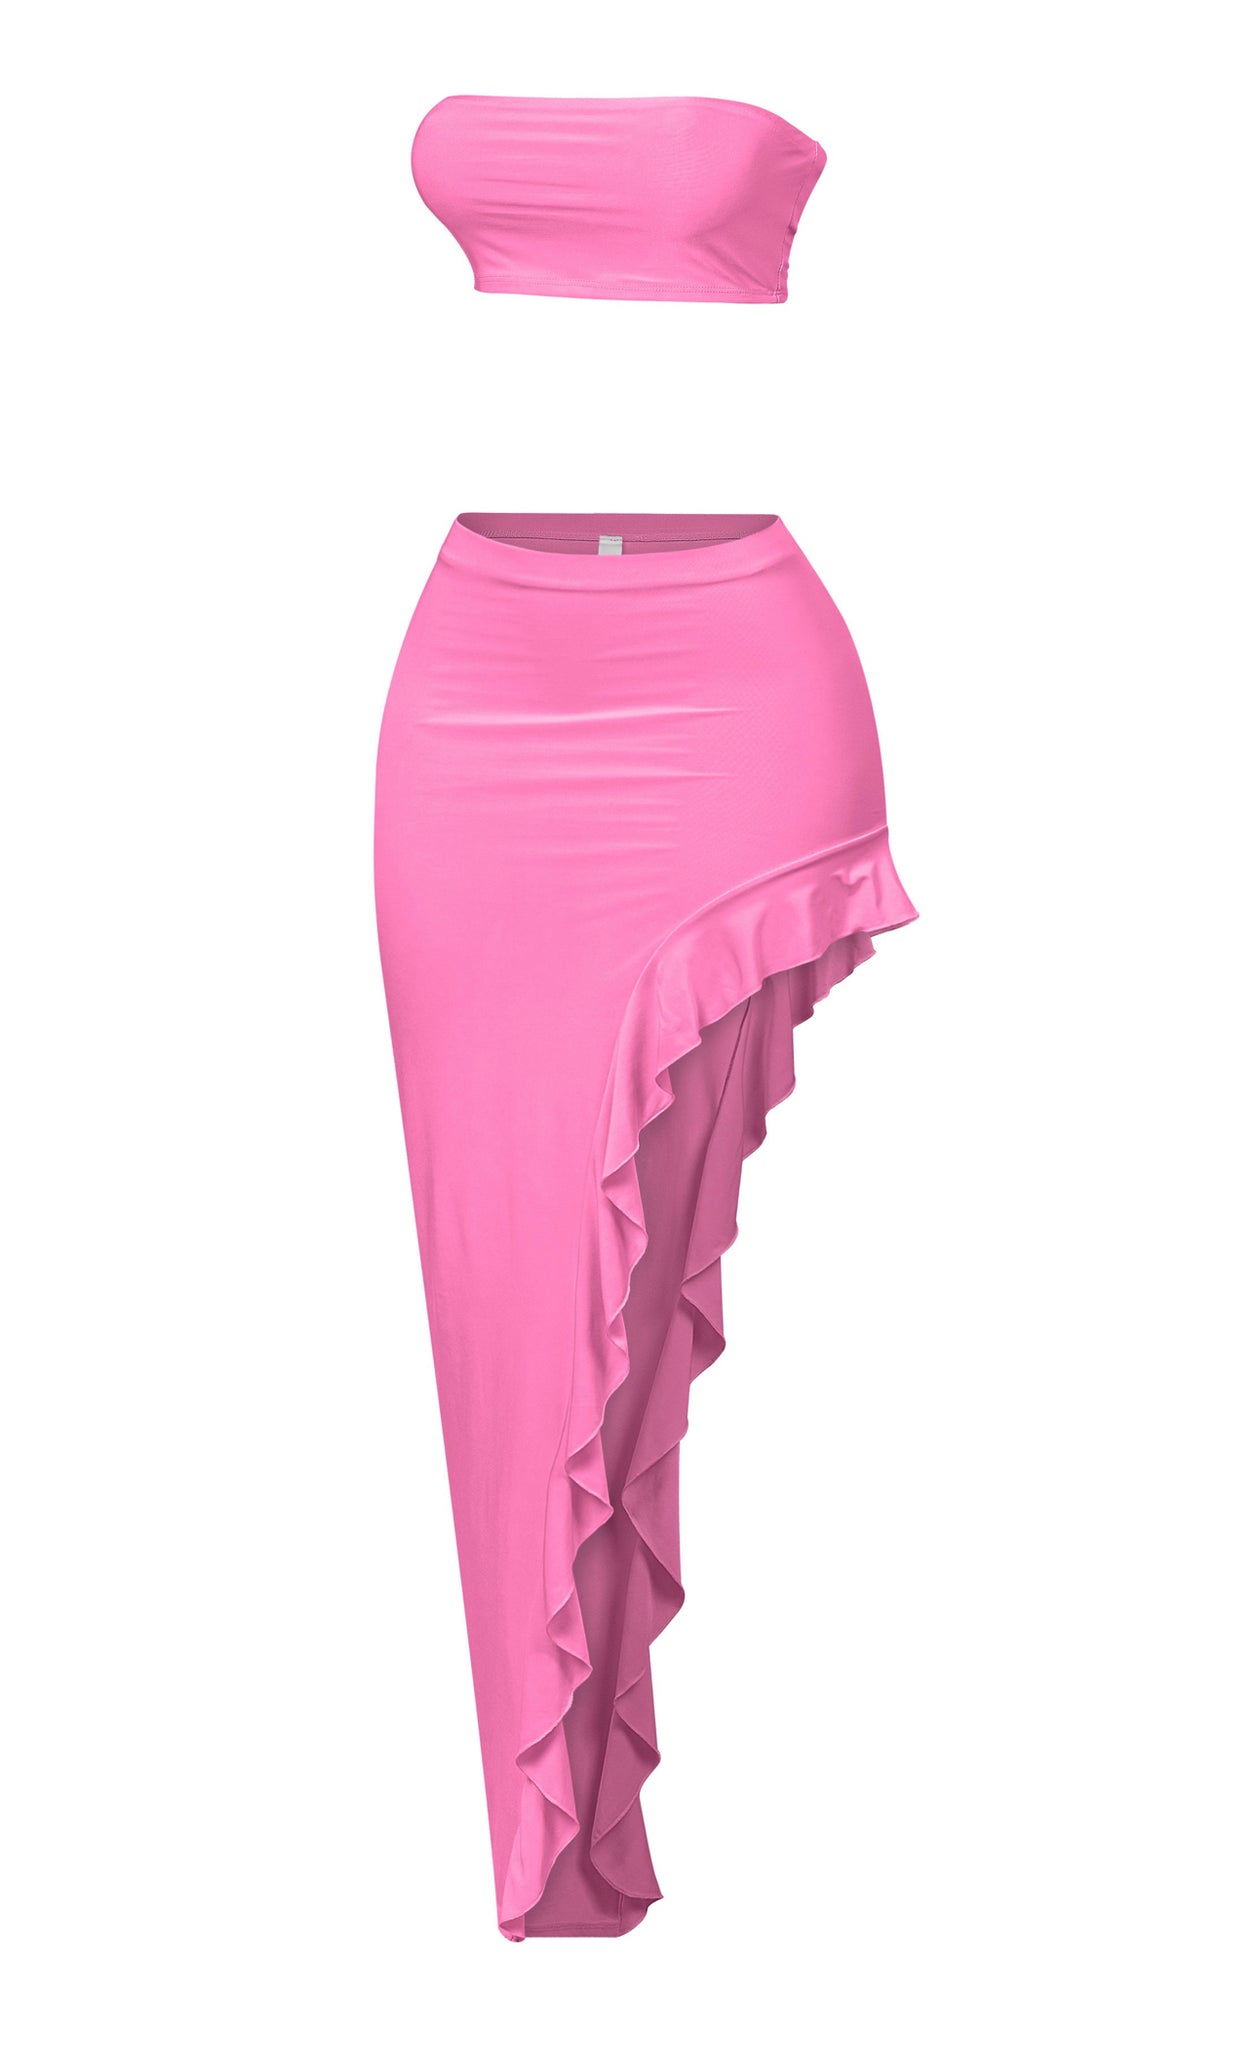 Naylea Ruffled Skirt Set (Pink)